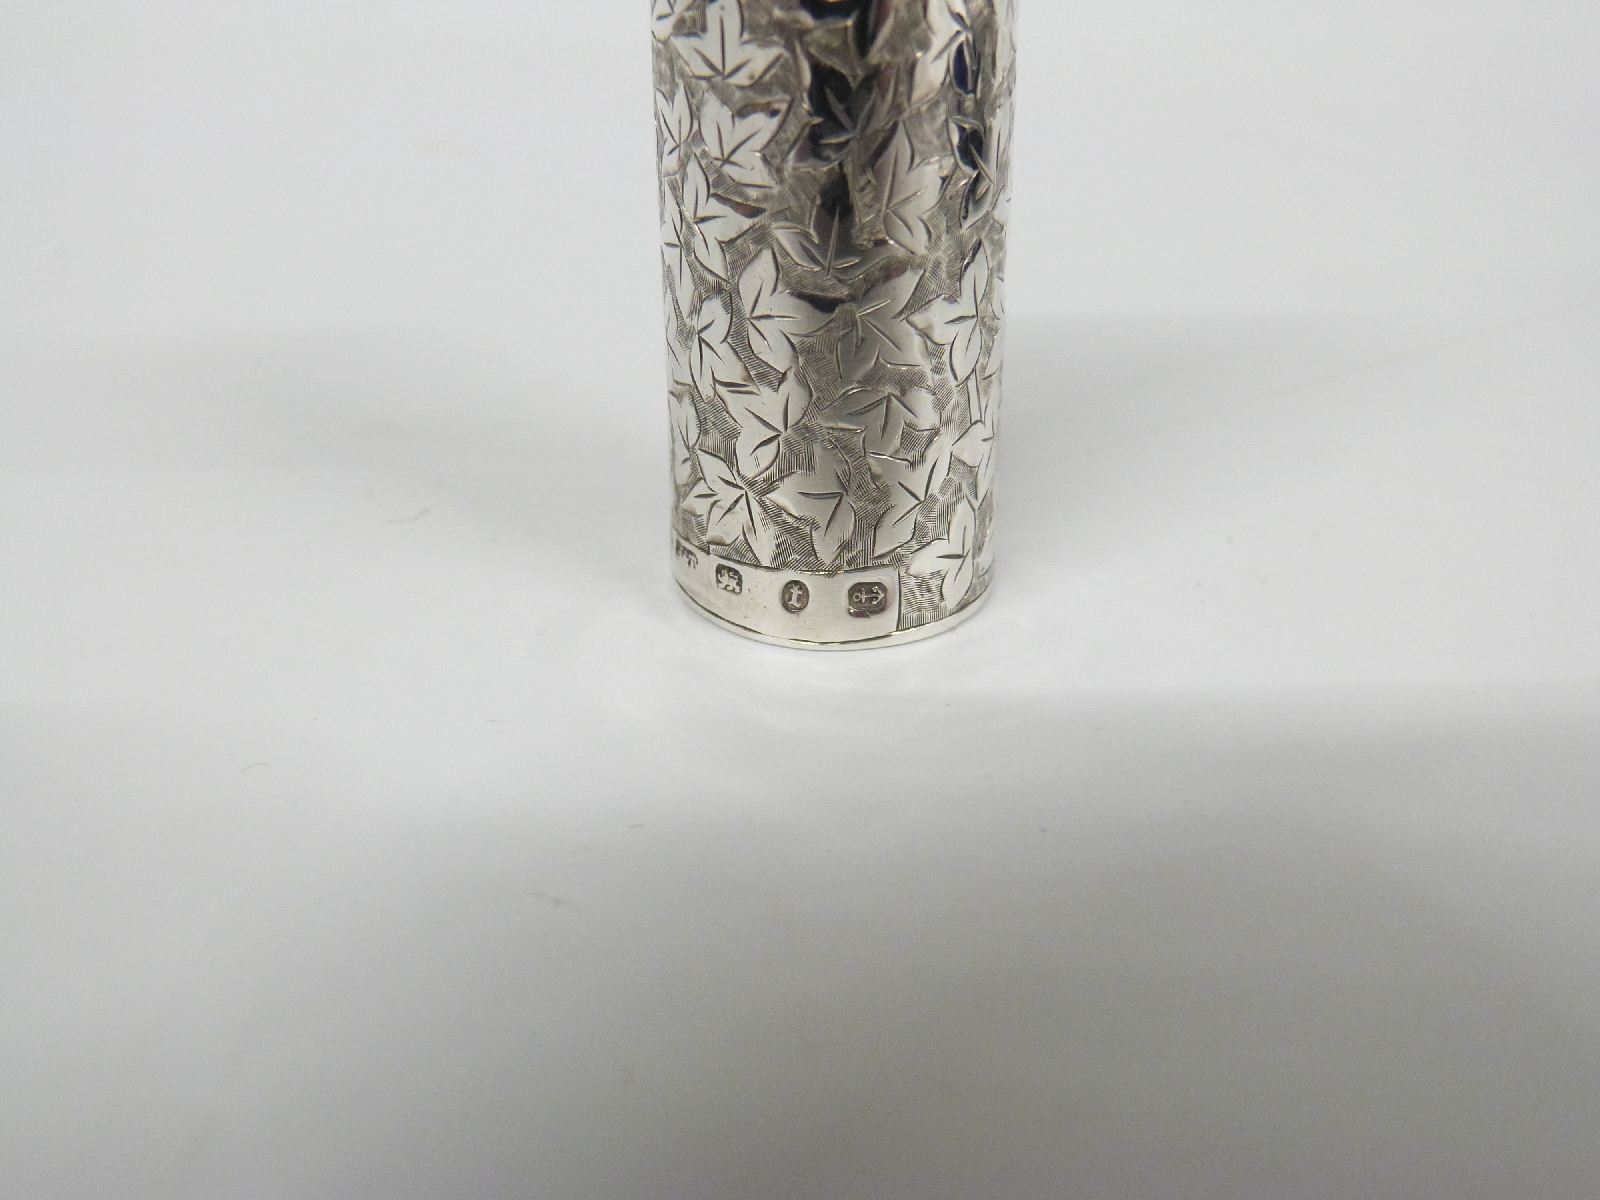 Victorian hallmarked silver scent bottle with engraved ivy leaf decoration, Birmingham 1893 maker - Image 3 of 3